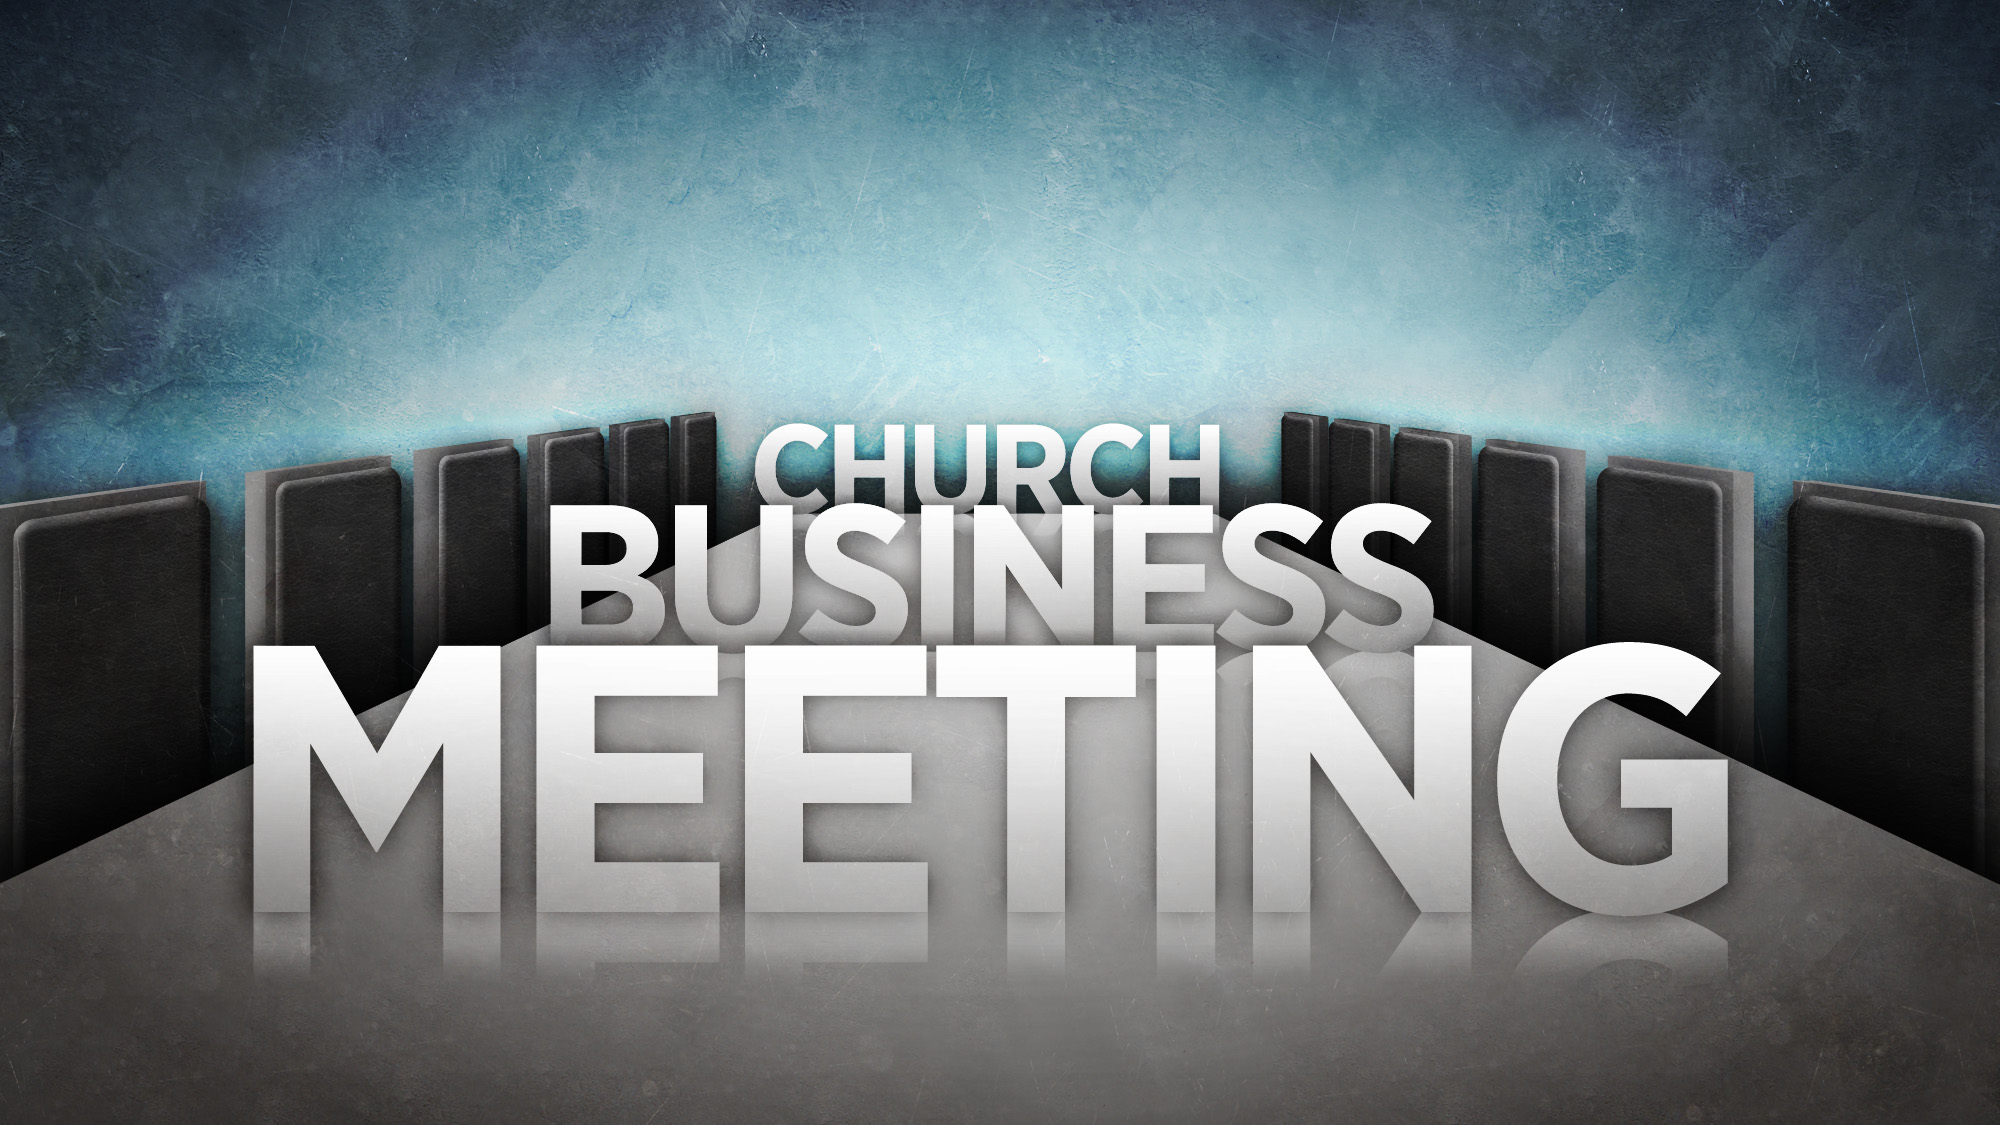 Annual Business Meeting   New England Baptist Church